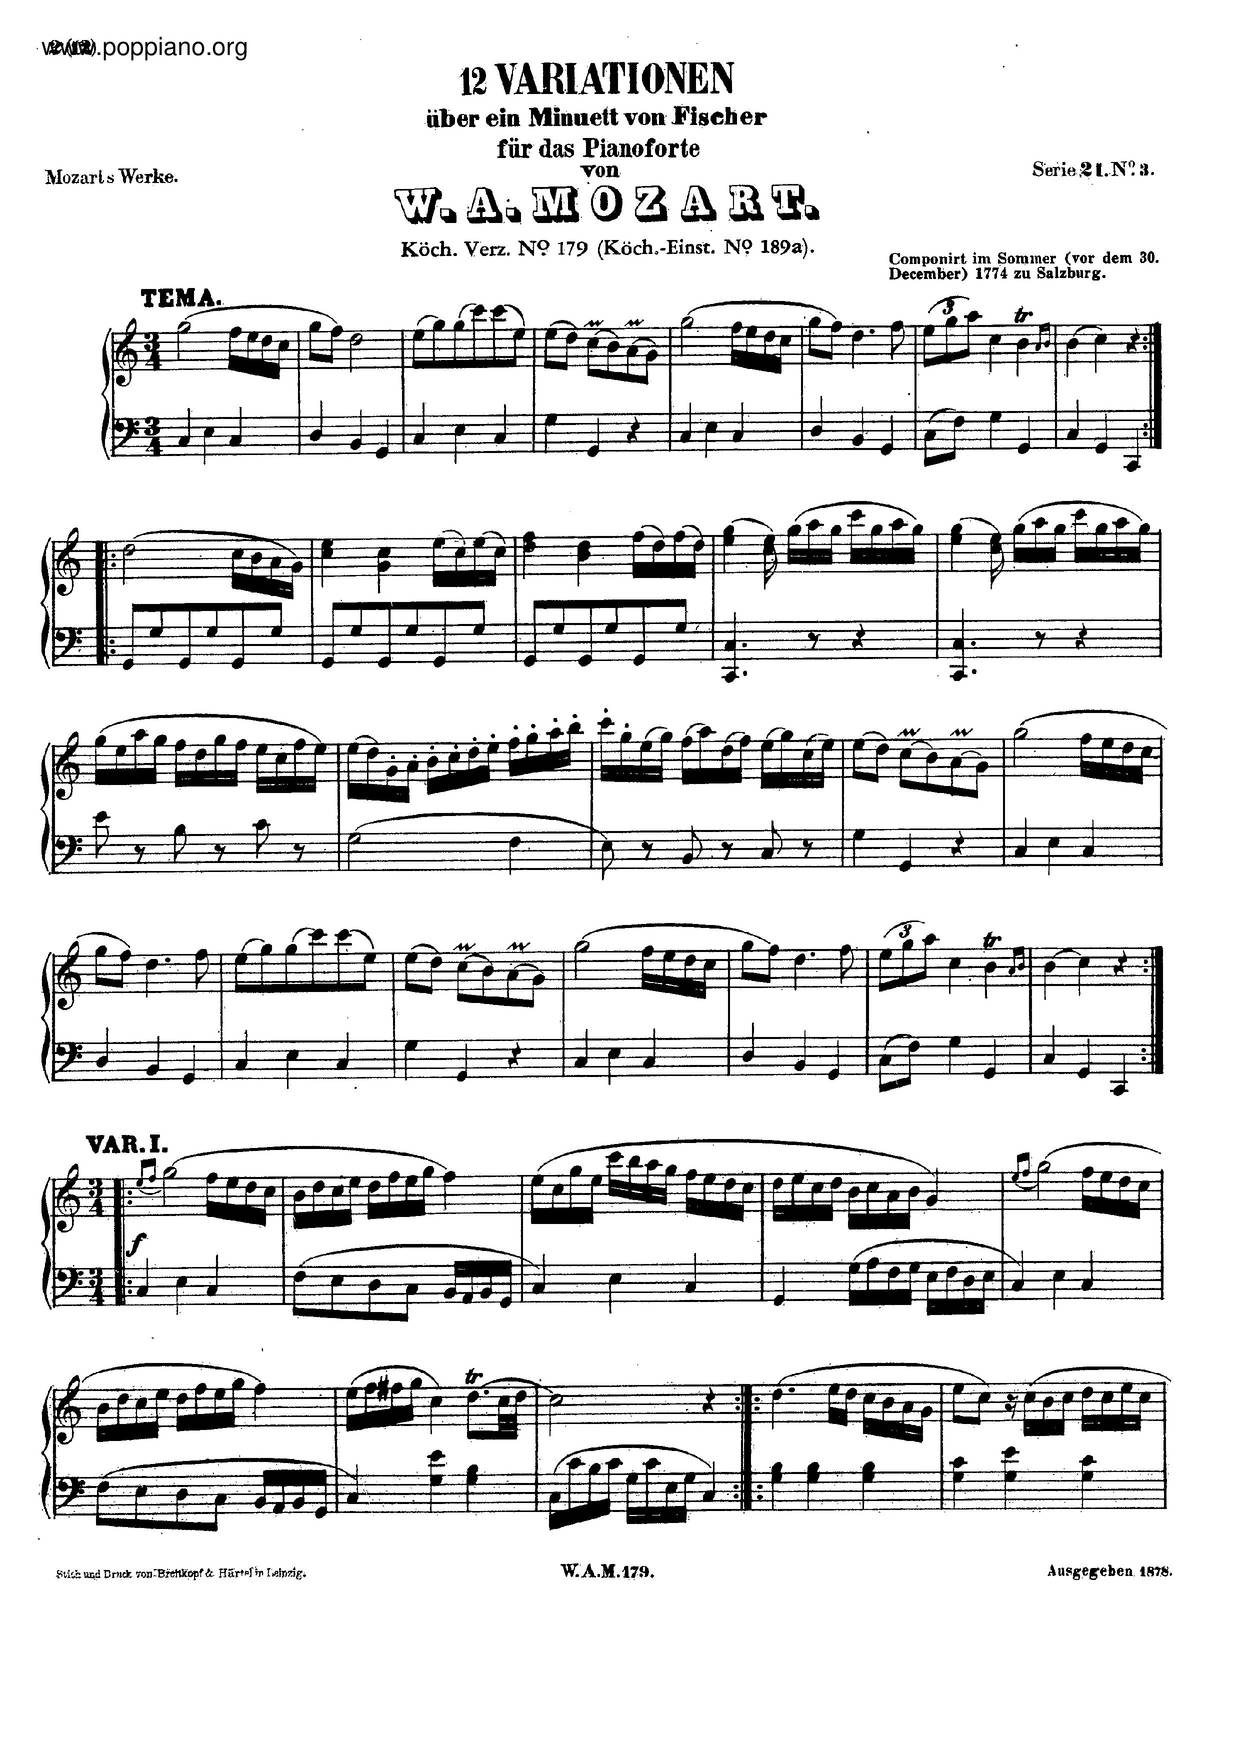 12 Variations On A Minuet By Fischer, K. 179/189A琴譜